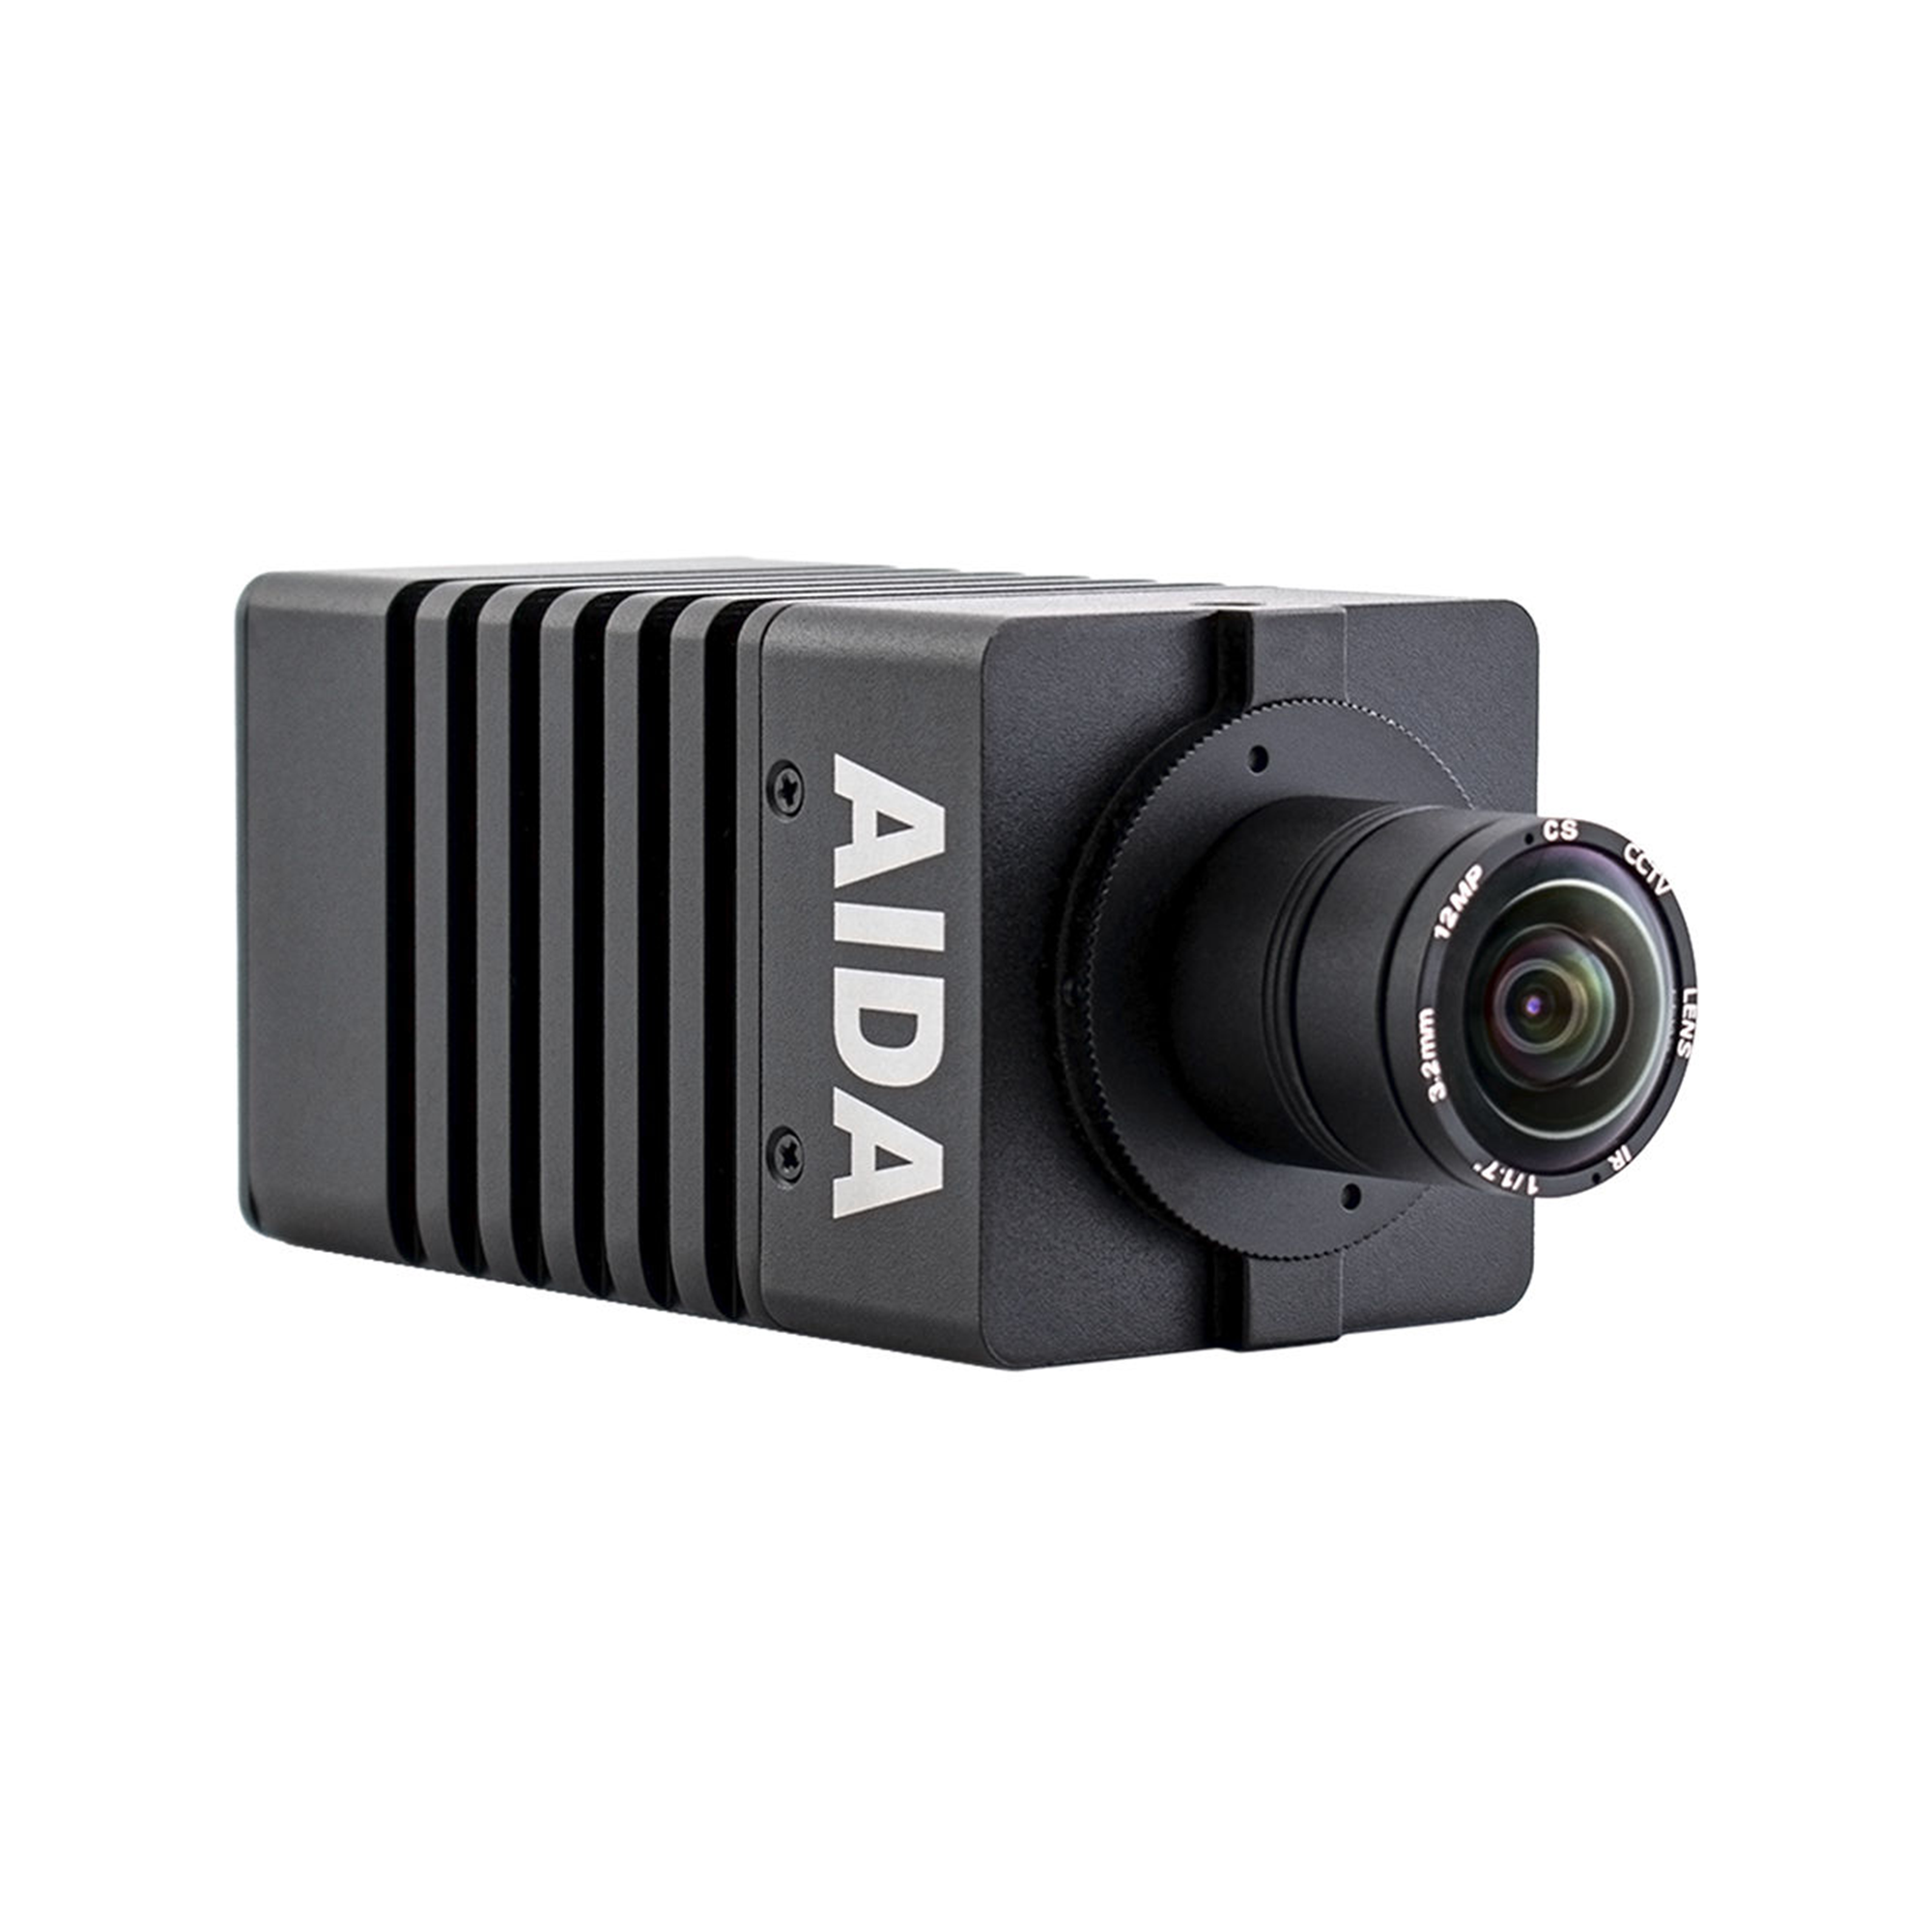 AIDA Imaging UHD-200 4K 60p POV Camera with Varifocal Lens